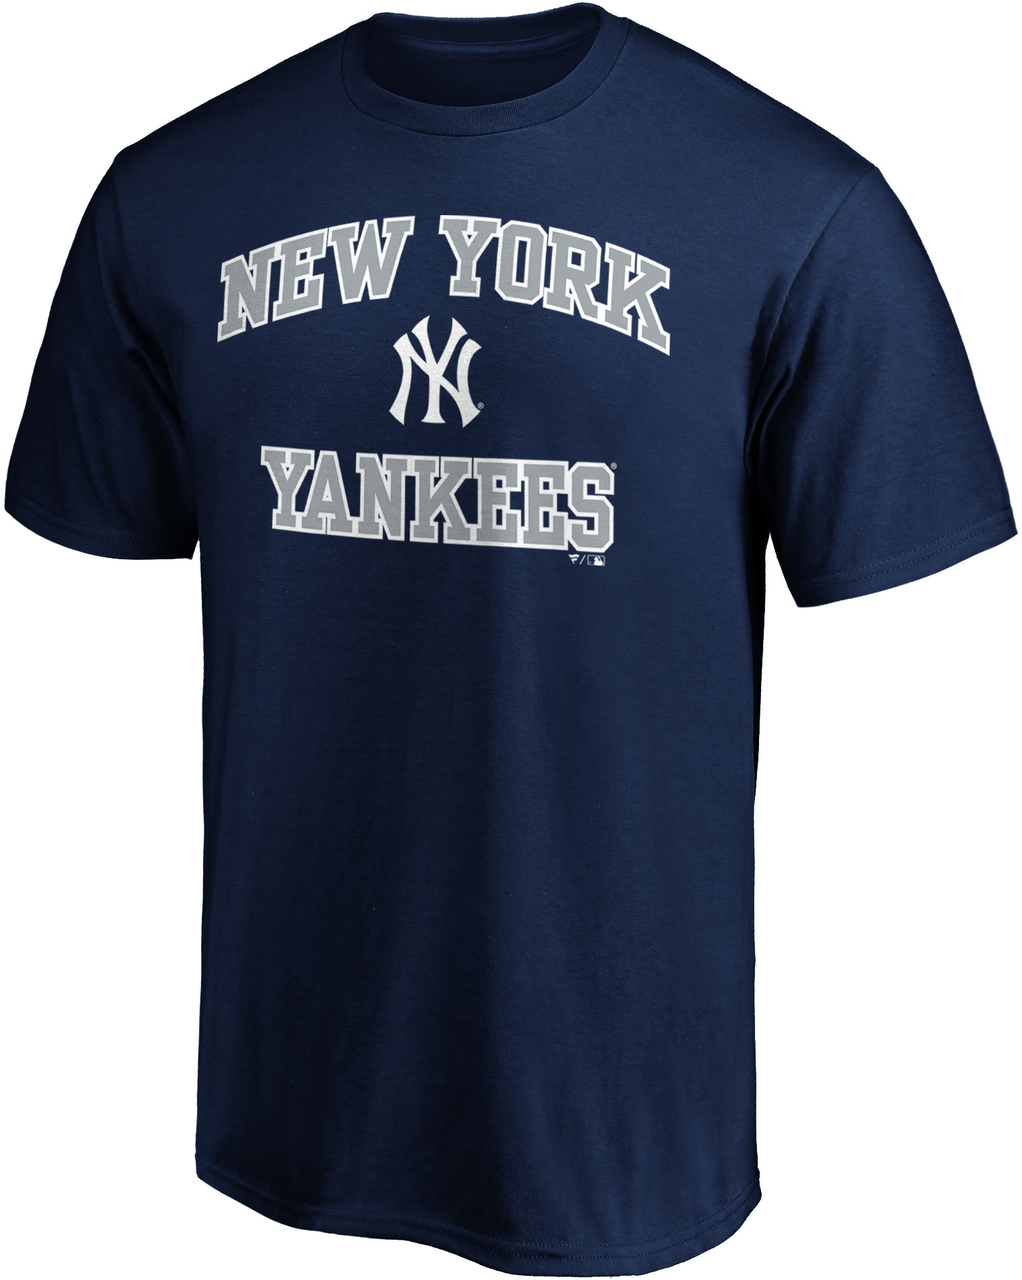 NY Yankees Heart and Soul Adult T-Shirt - Navy